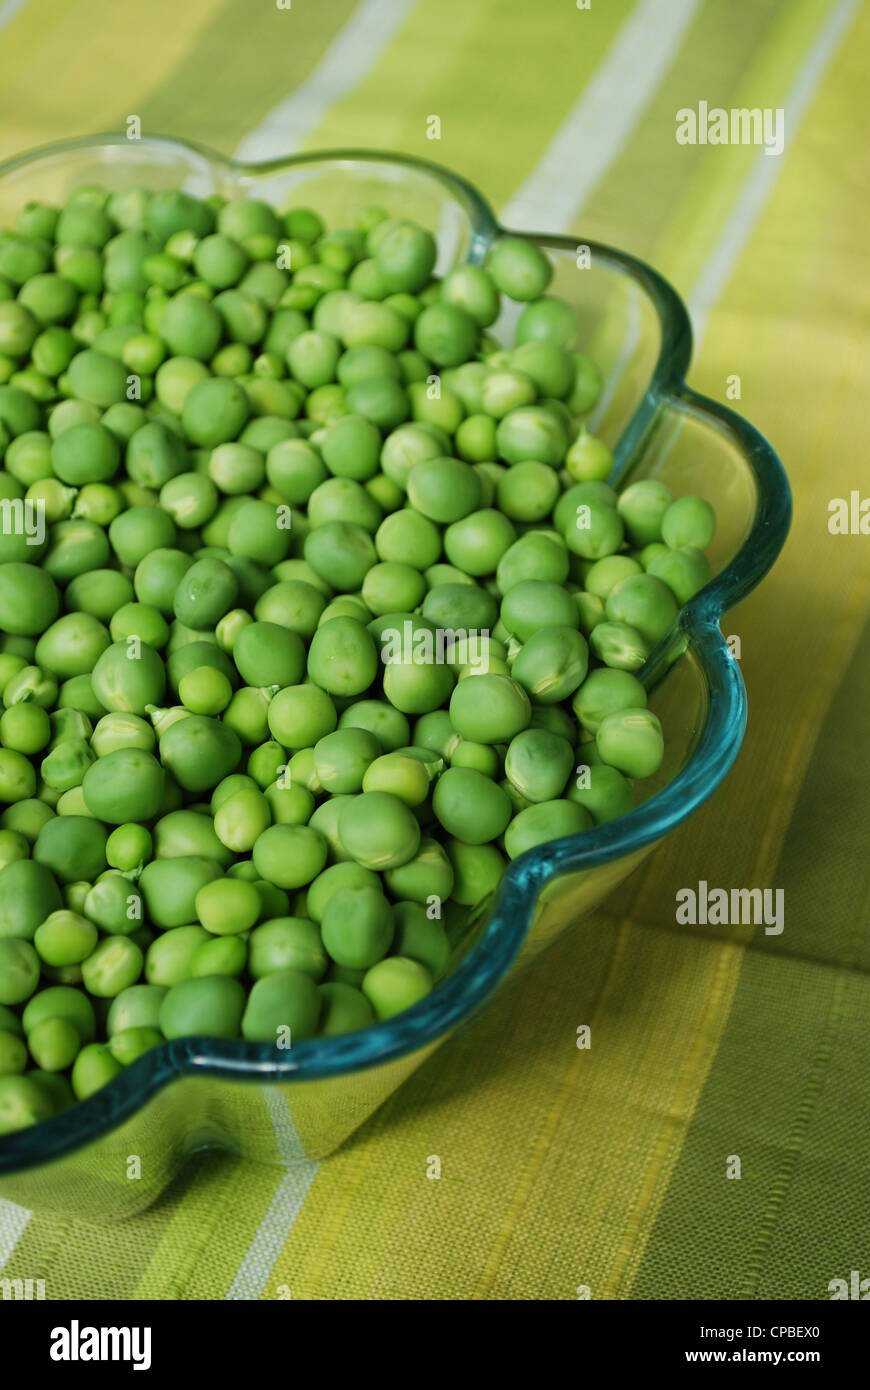 Shelled fresh ripe sweet green peas in a glass bowl Stock Photo